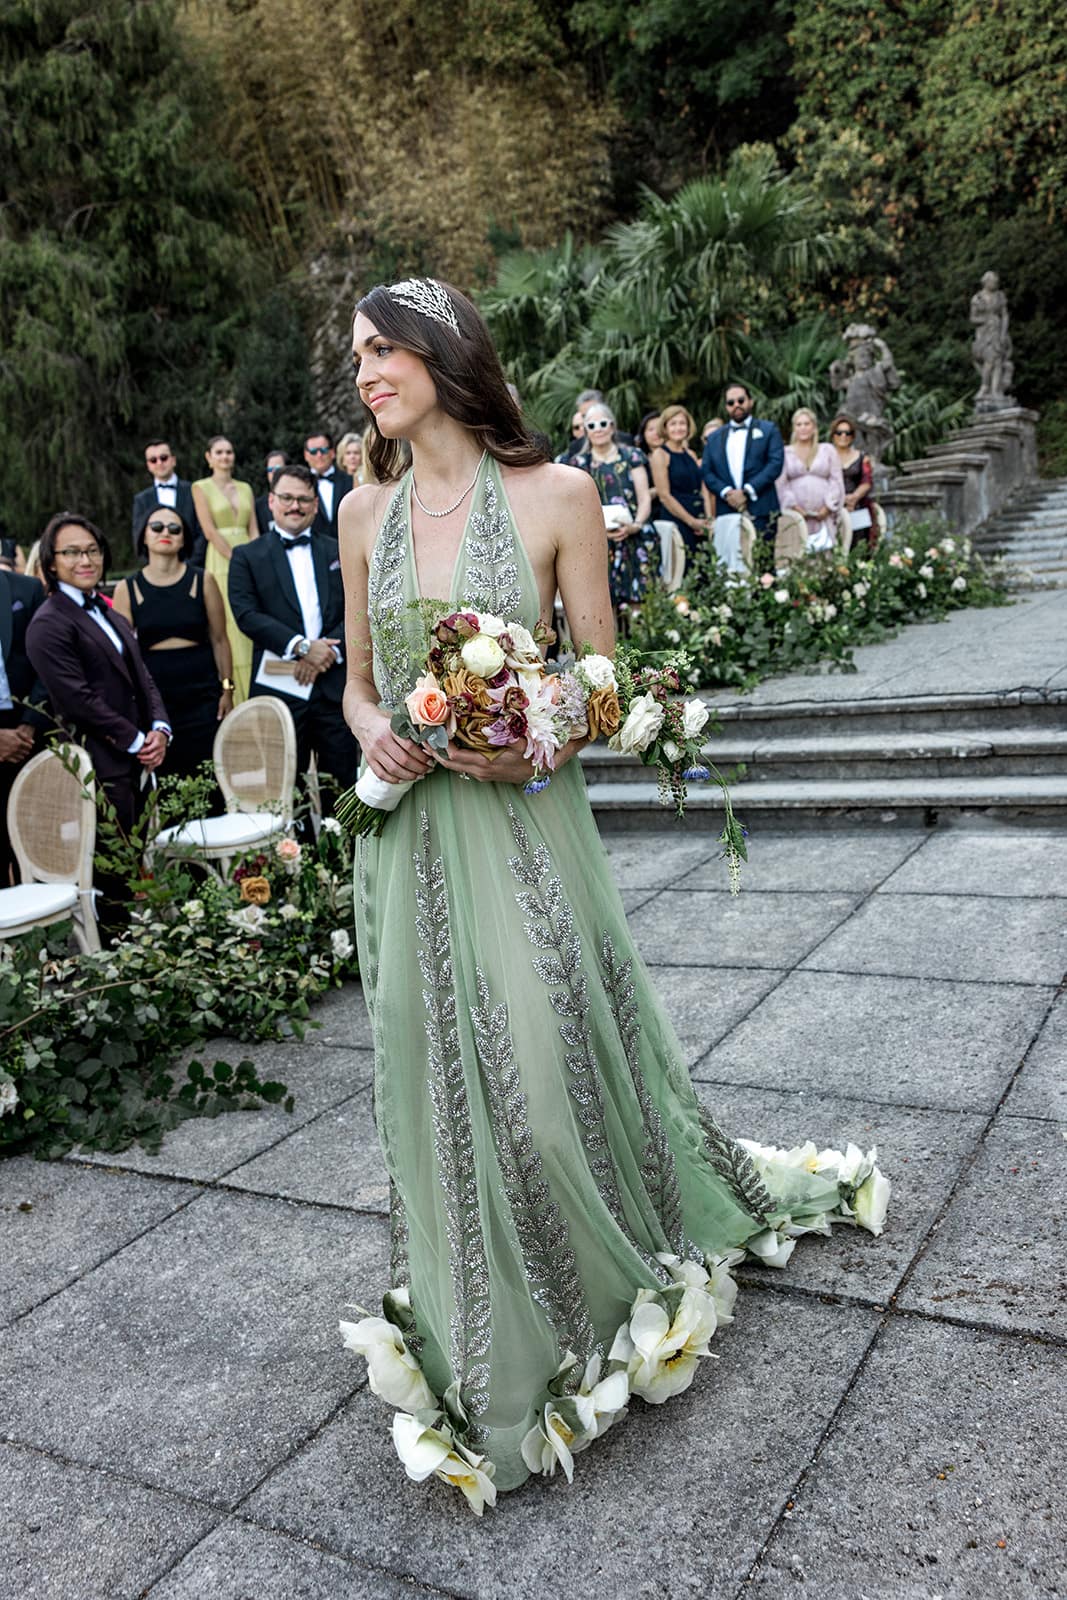 Bride walks down the ceremony aisle at a Villa Pizzo wedding